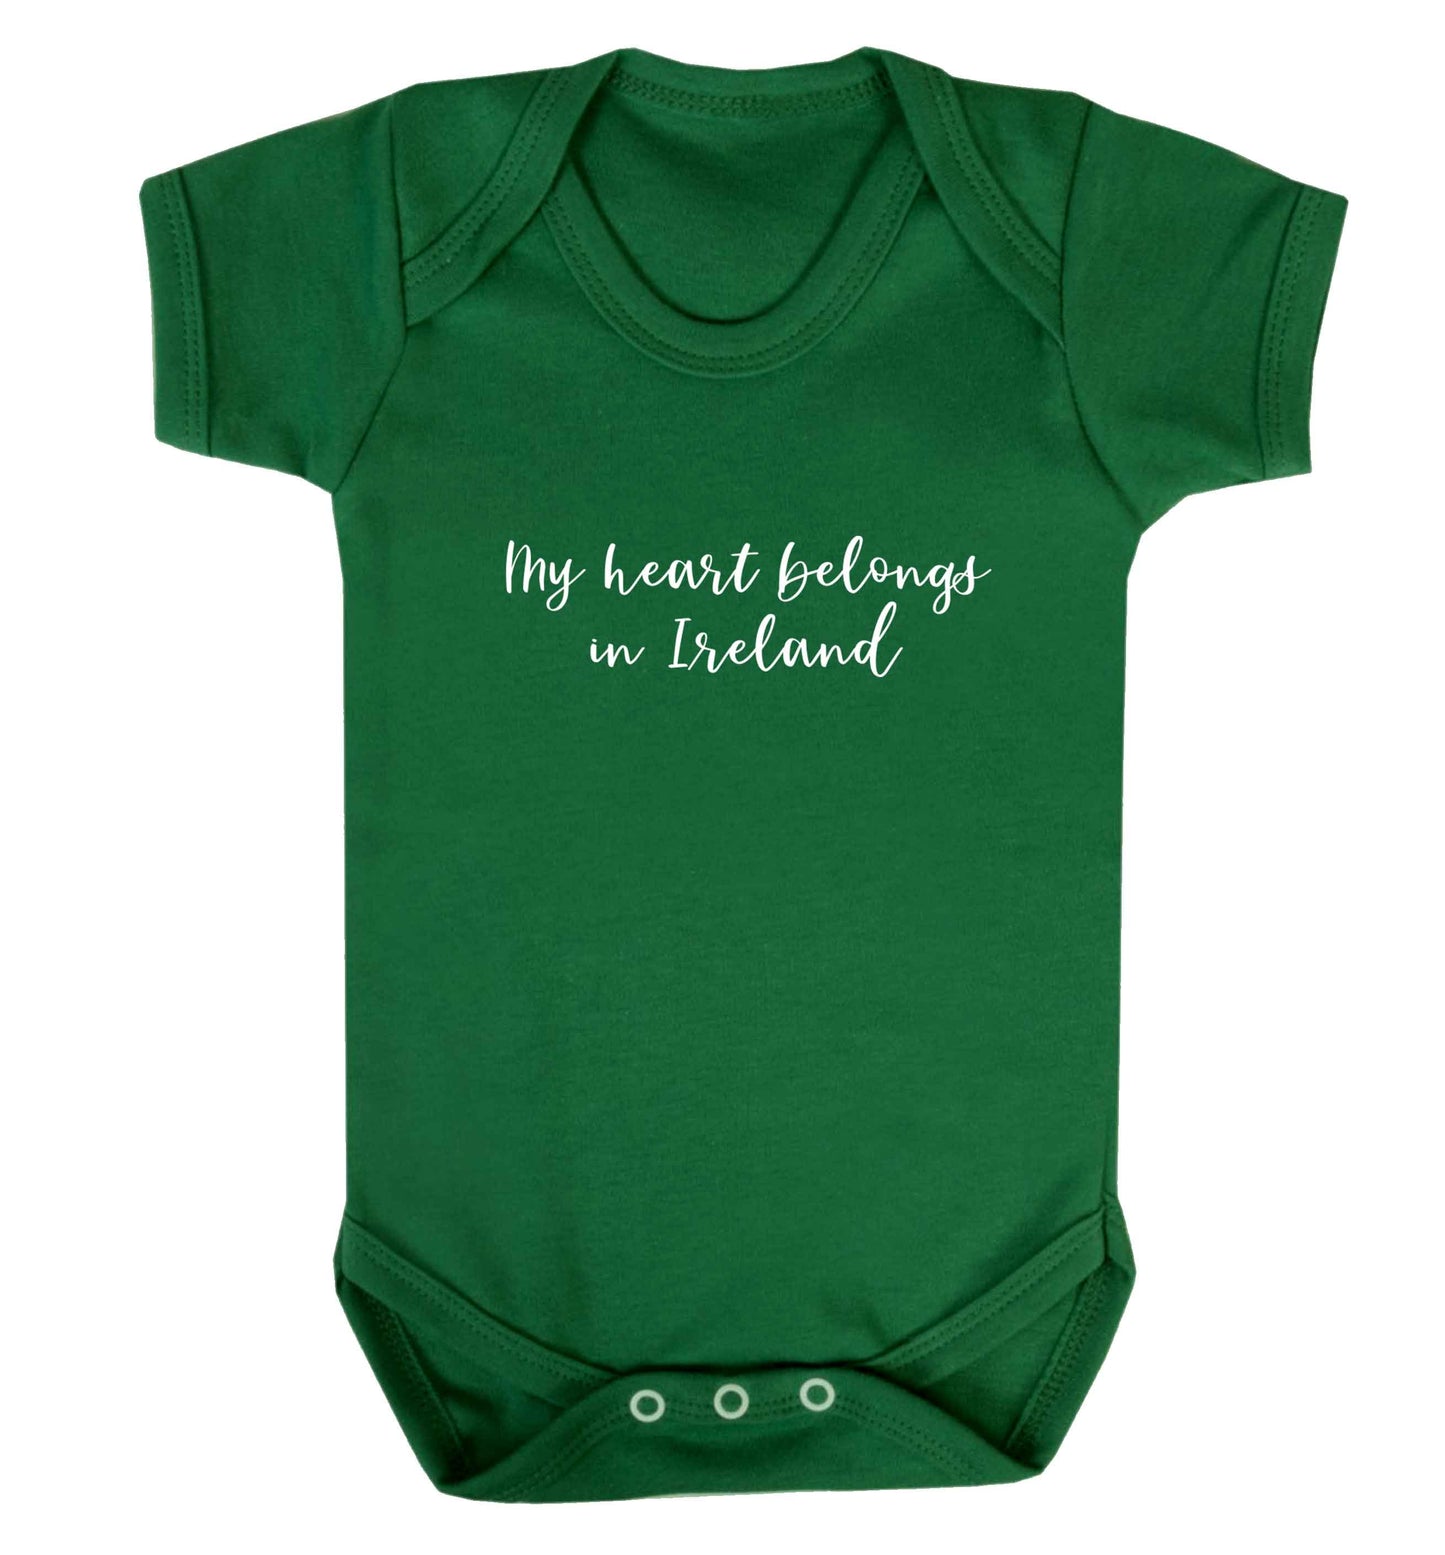 My heart belongs in Ireland baby vest green 18-24 months